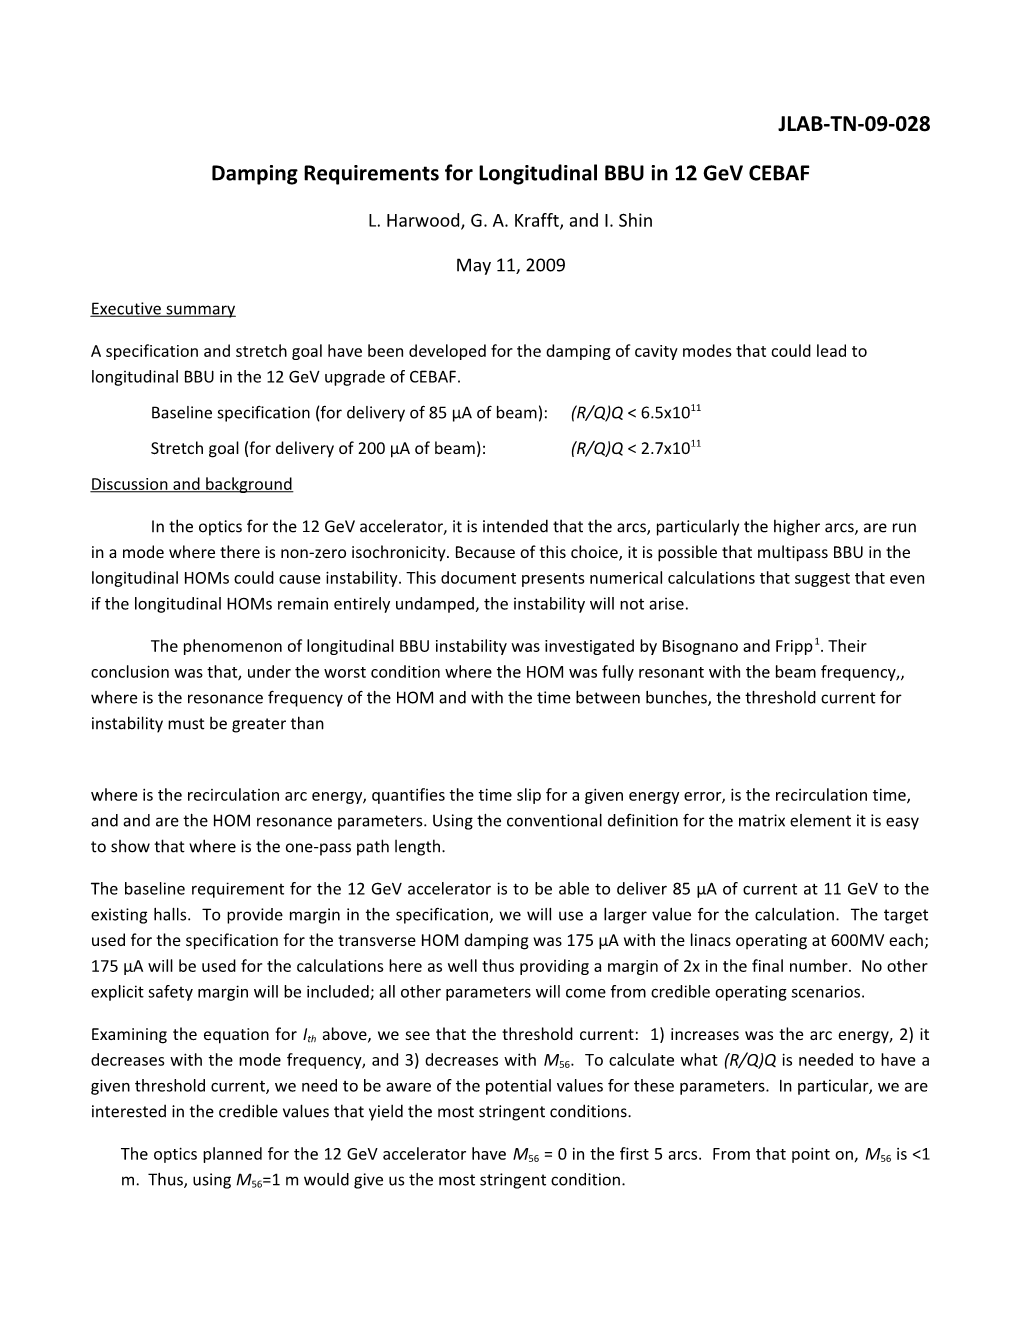 Damping Requirements for Longitudinal BBU in 12 Gev CEBAF